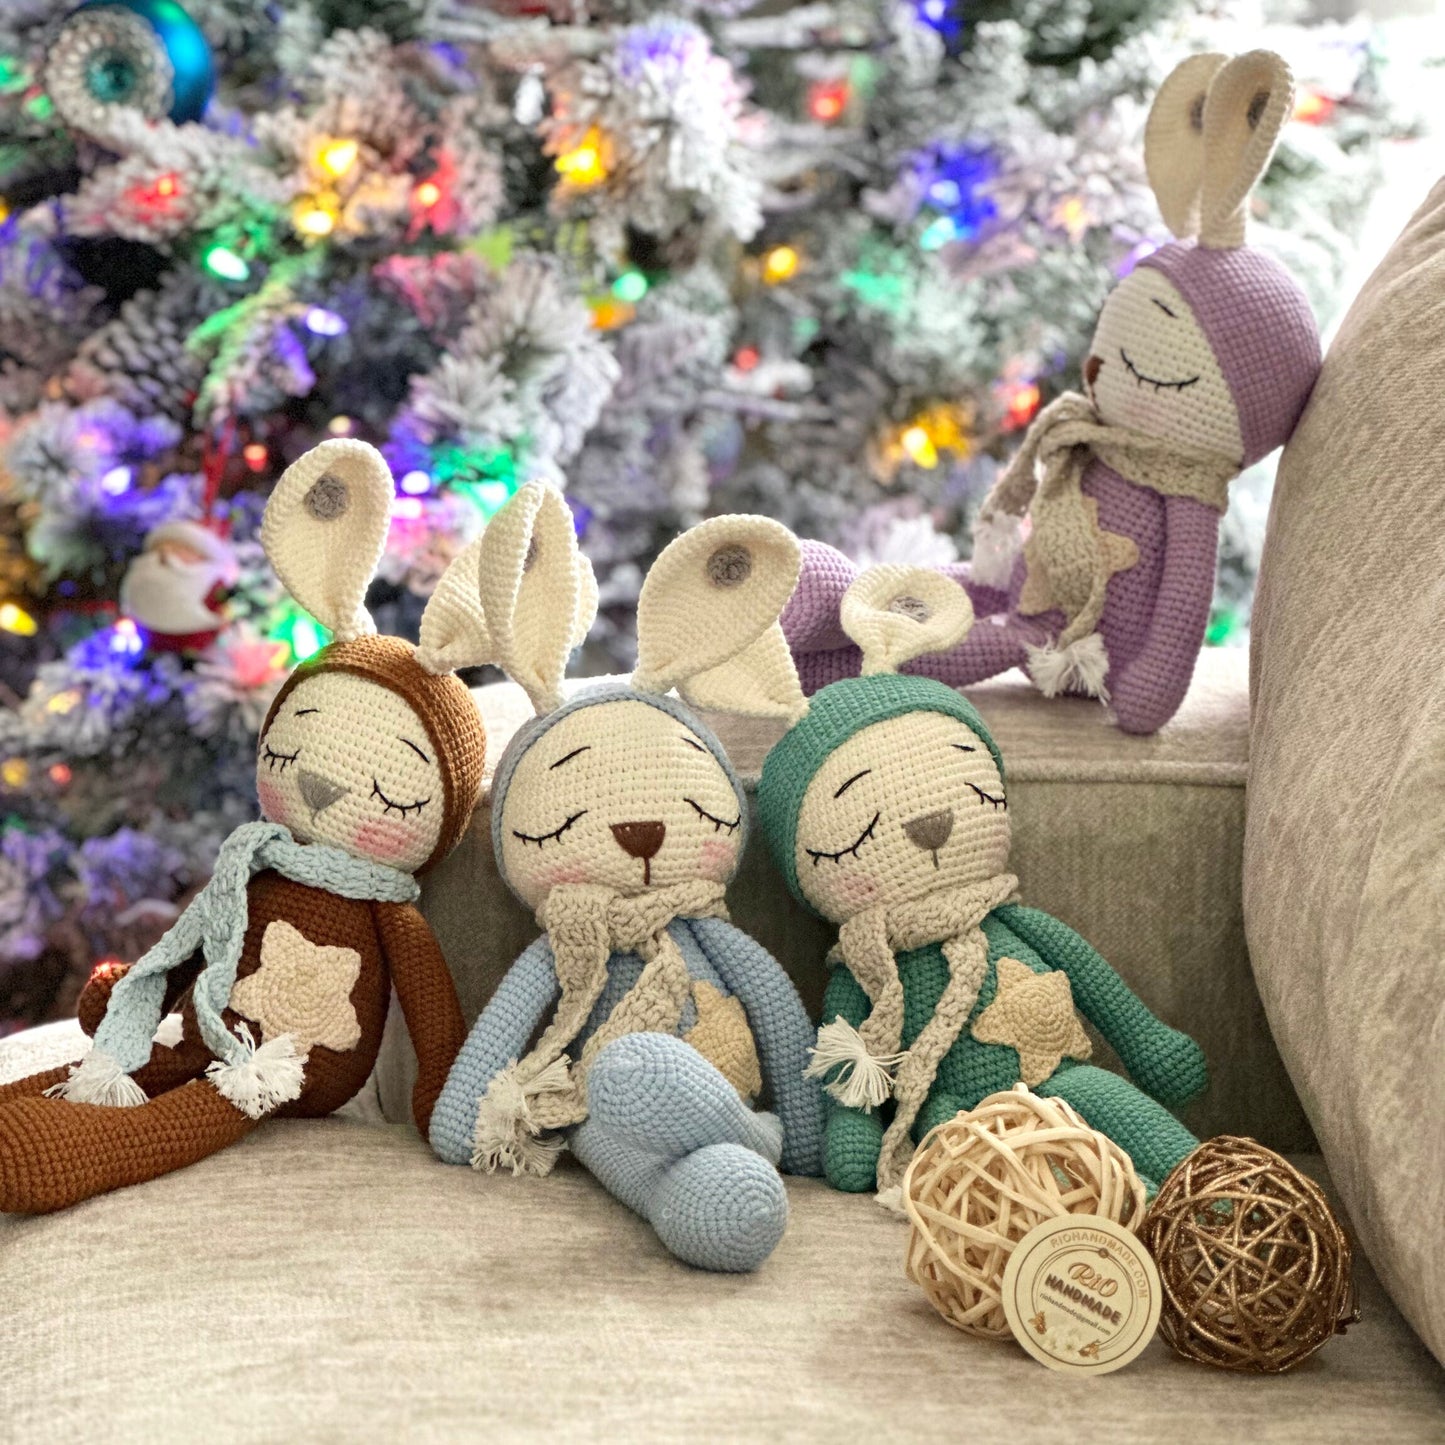 Baby Shower Gift Set For Newborns, Crochet Bunny Doll & Wooden Ring (NO SOUND) Set, Amigurumi Toy, Sleeping Rabbit, Matching Gifts